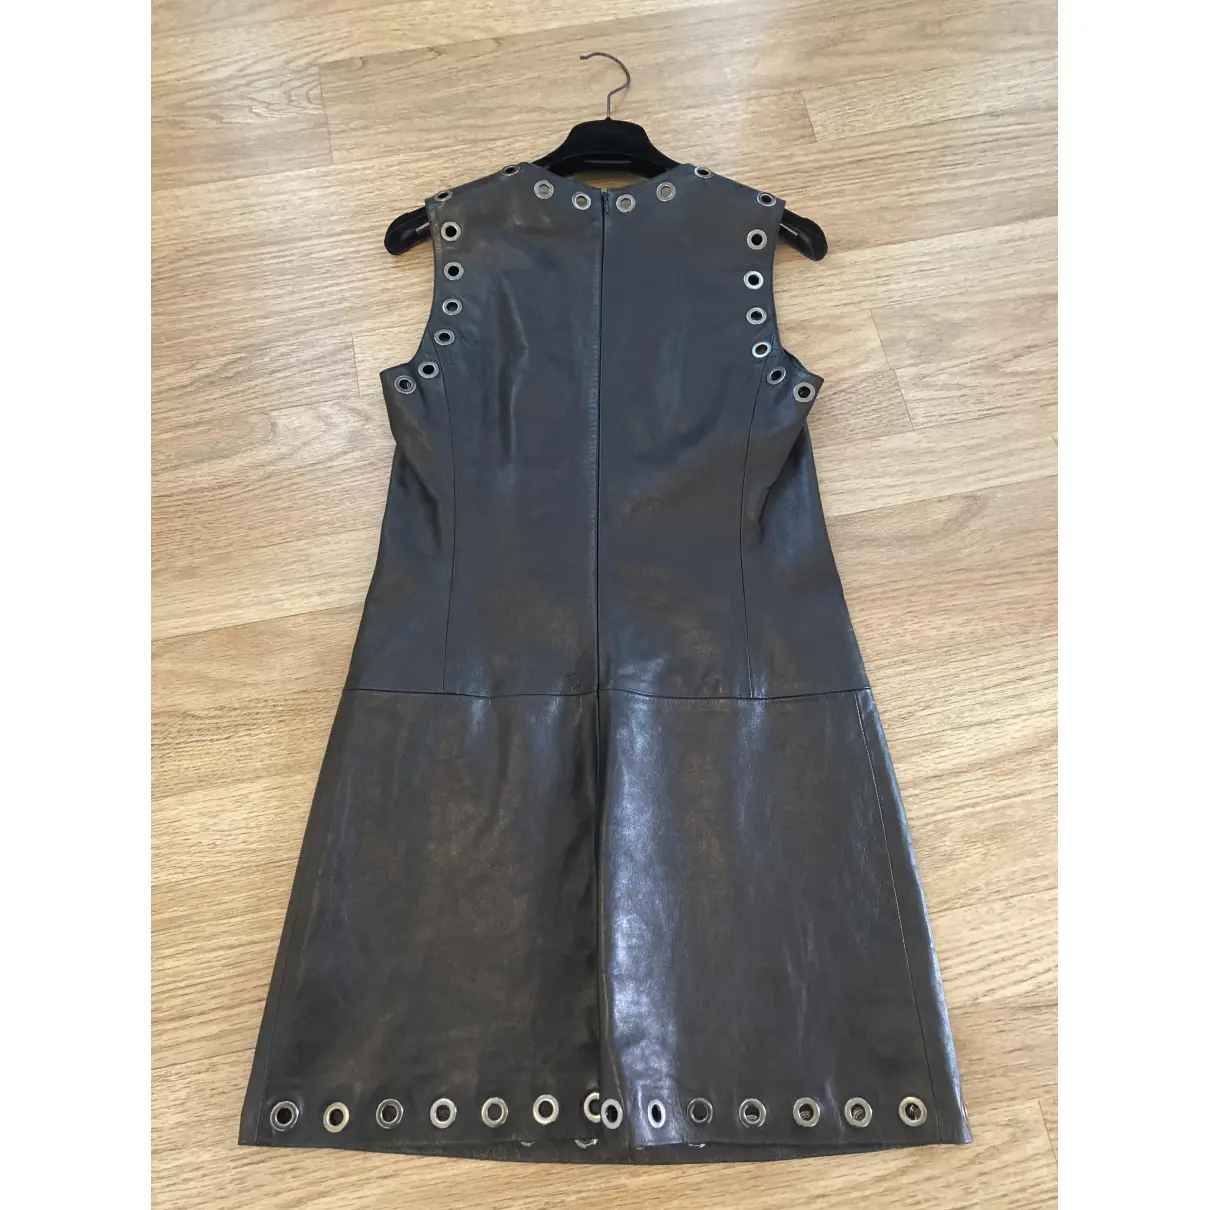 Buy Plein Sud Leather mini dress online